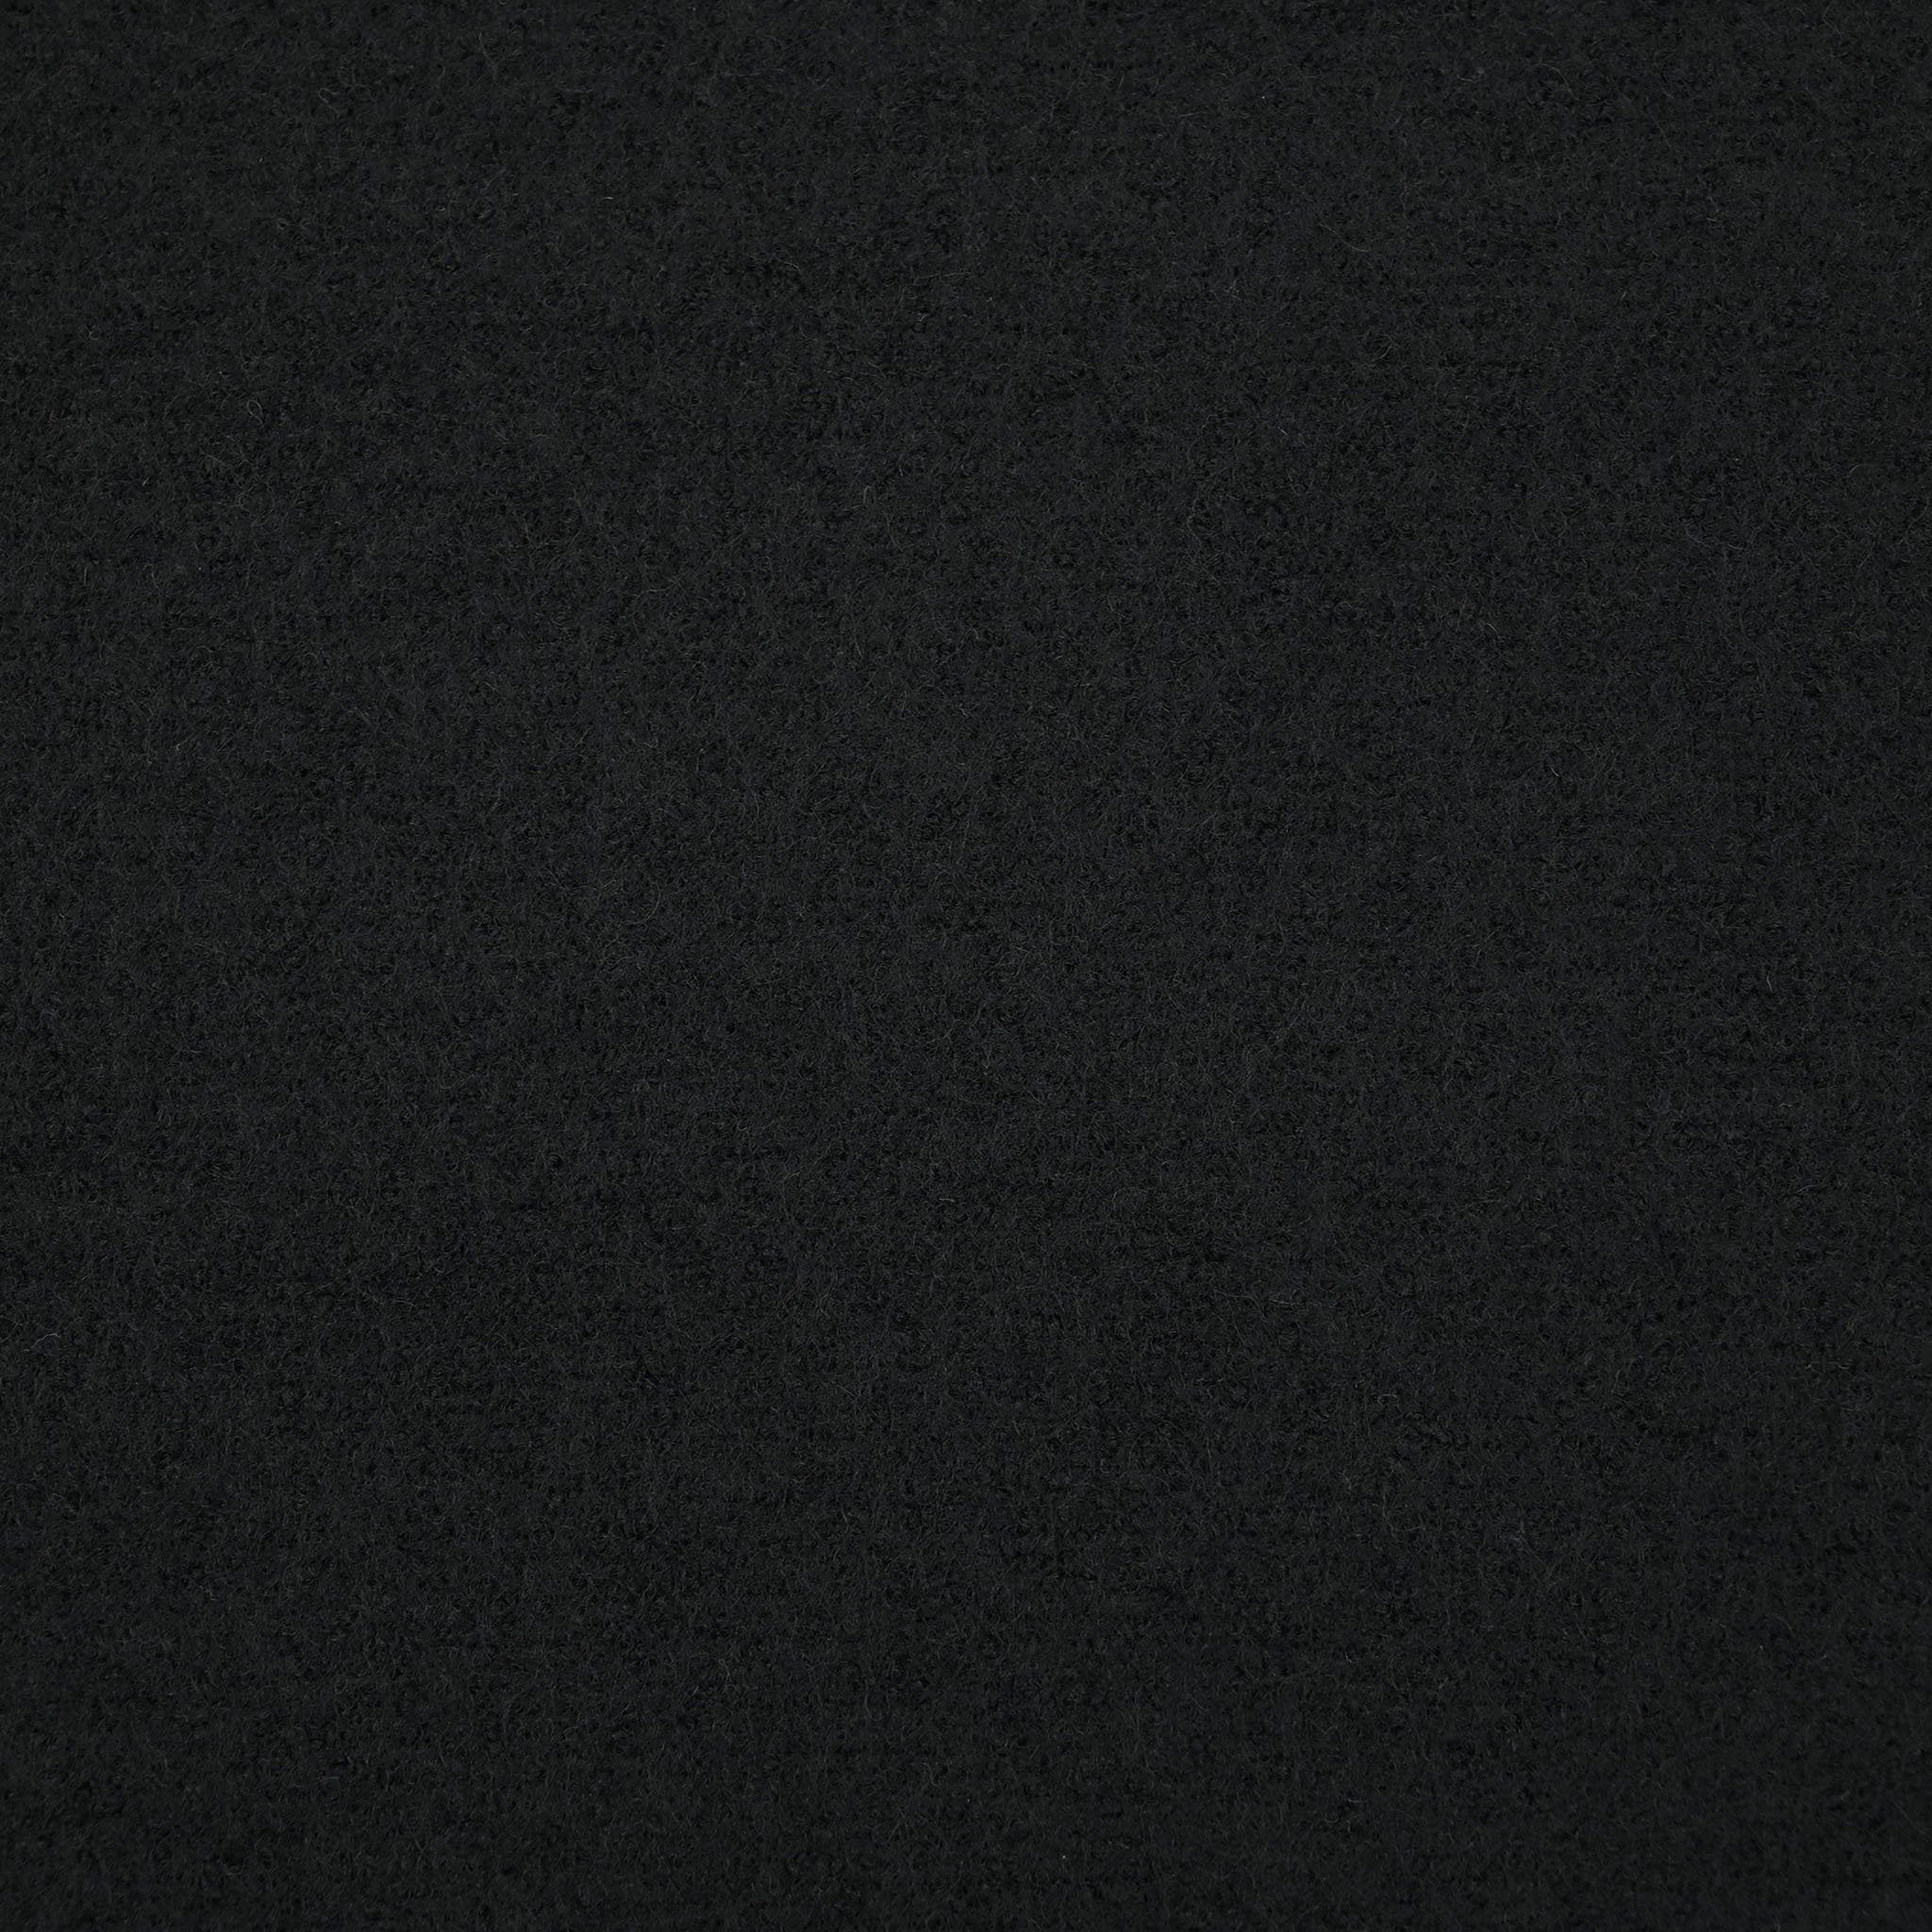 Black Boucle Knit Fabric 97383